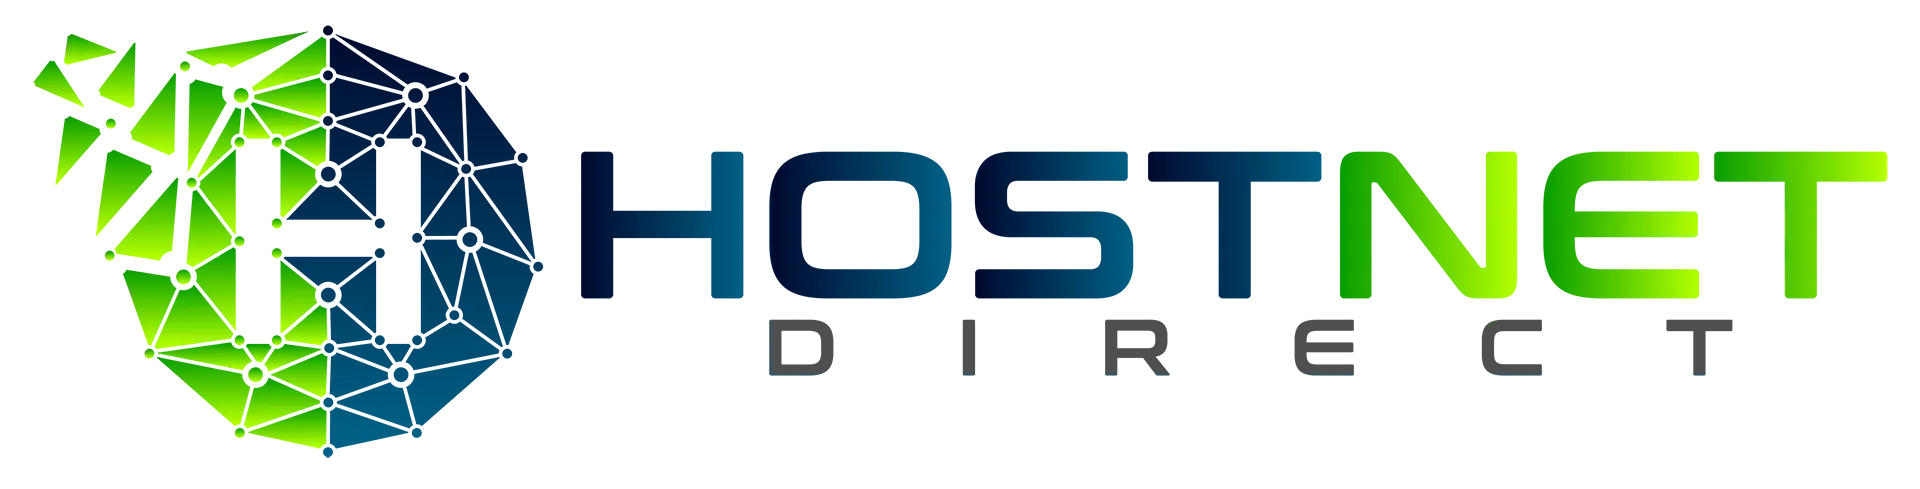 HostNetDirect Logo